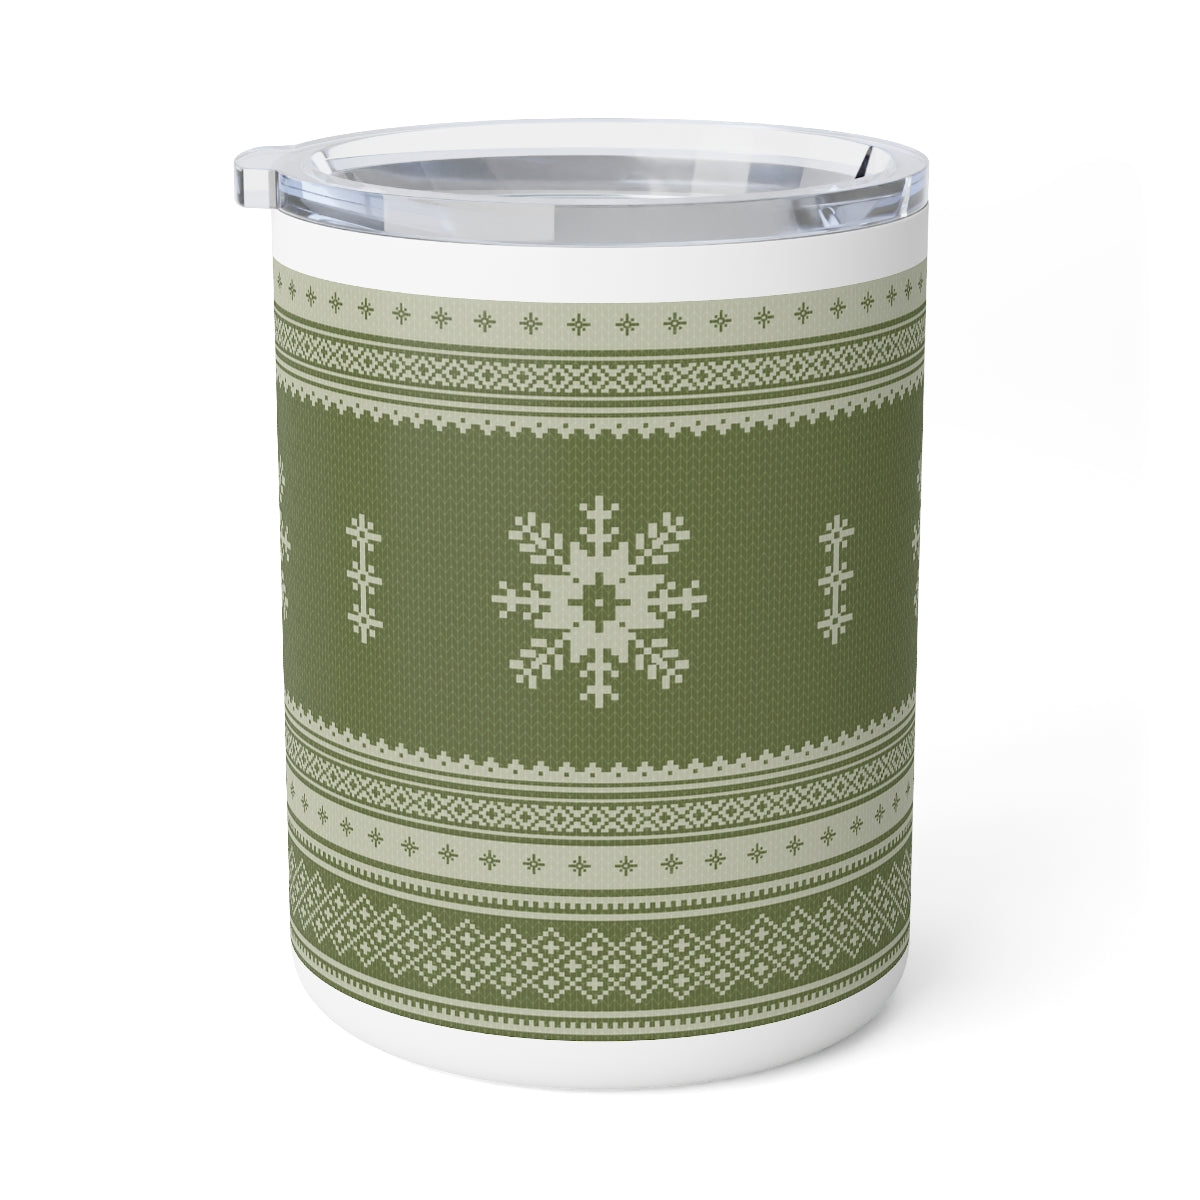 Scandinavian Christmas Dark Green Insulated Coffee Mug